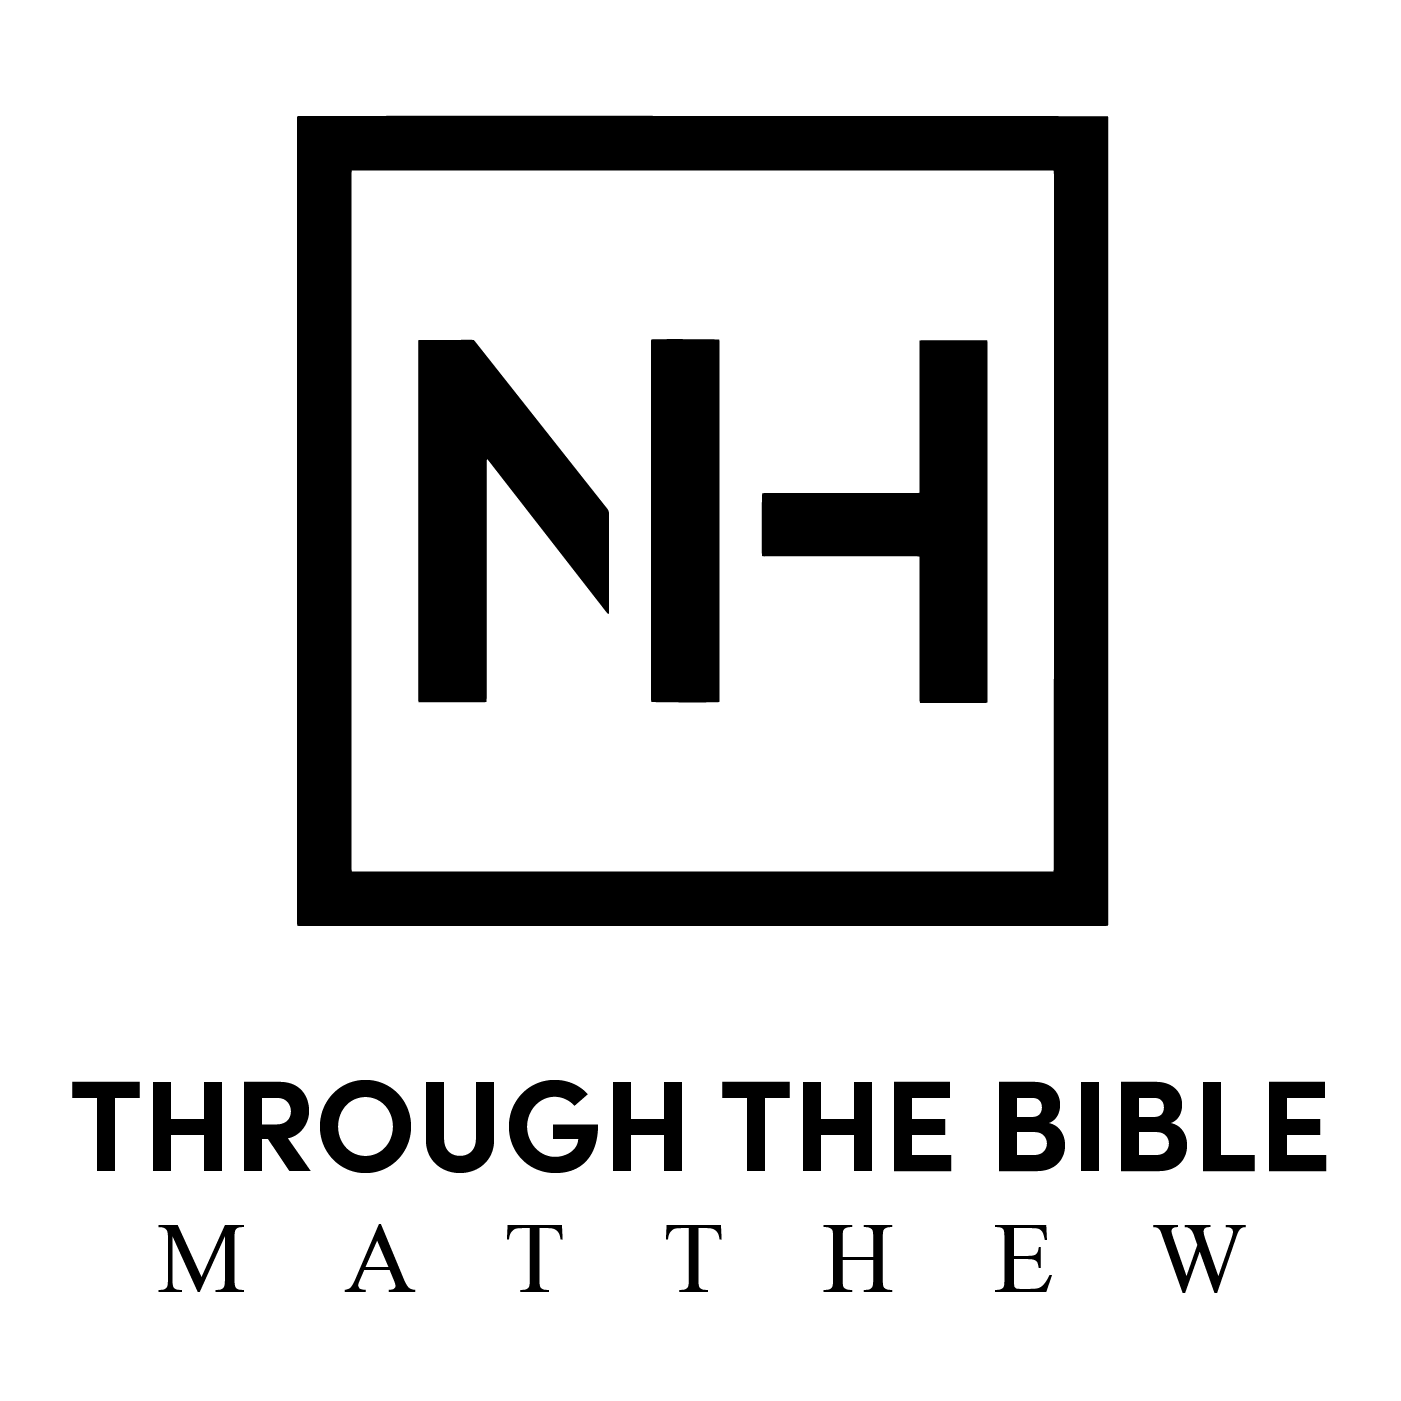 Matthew 1